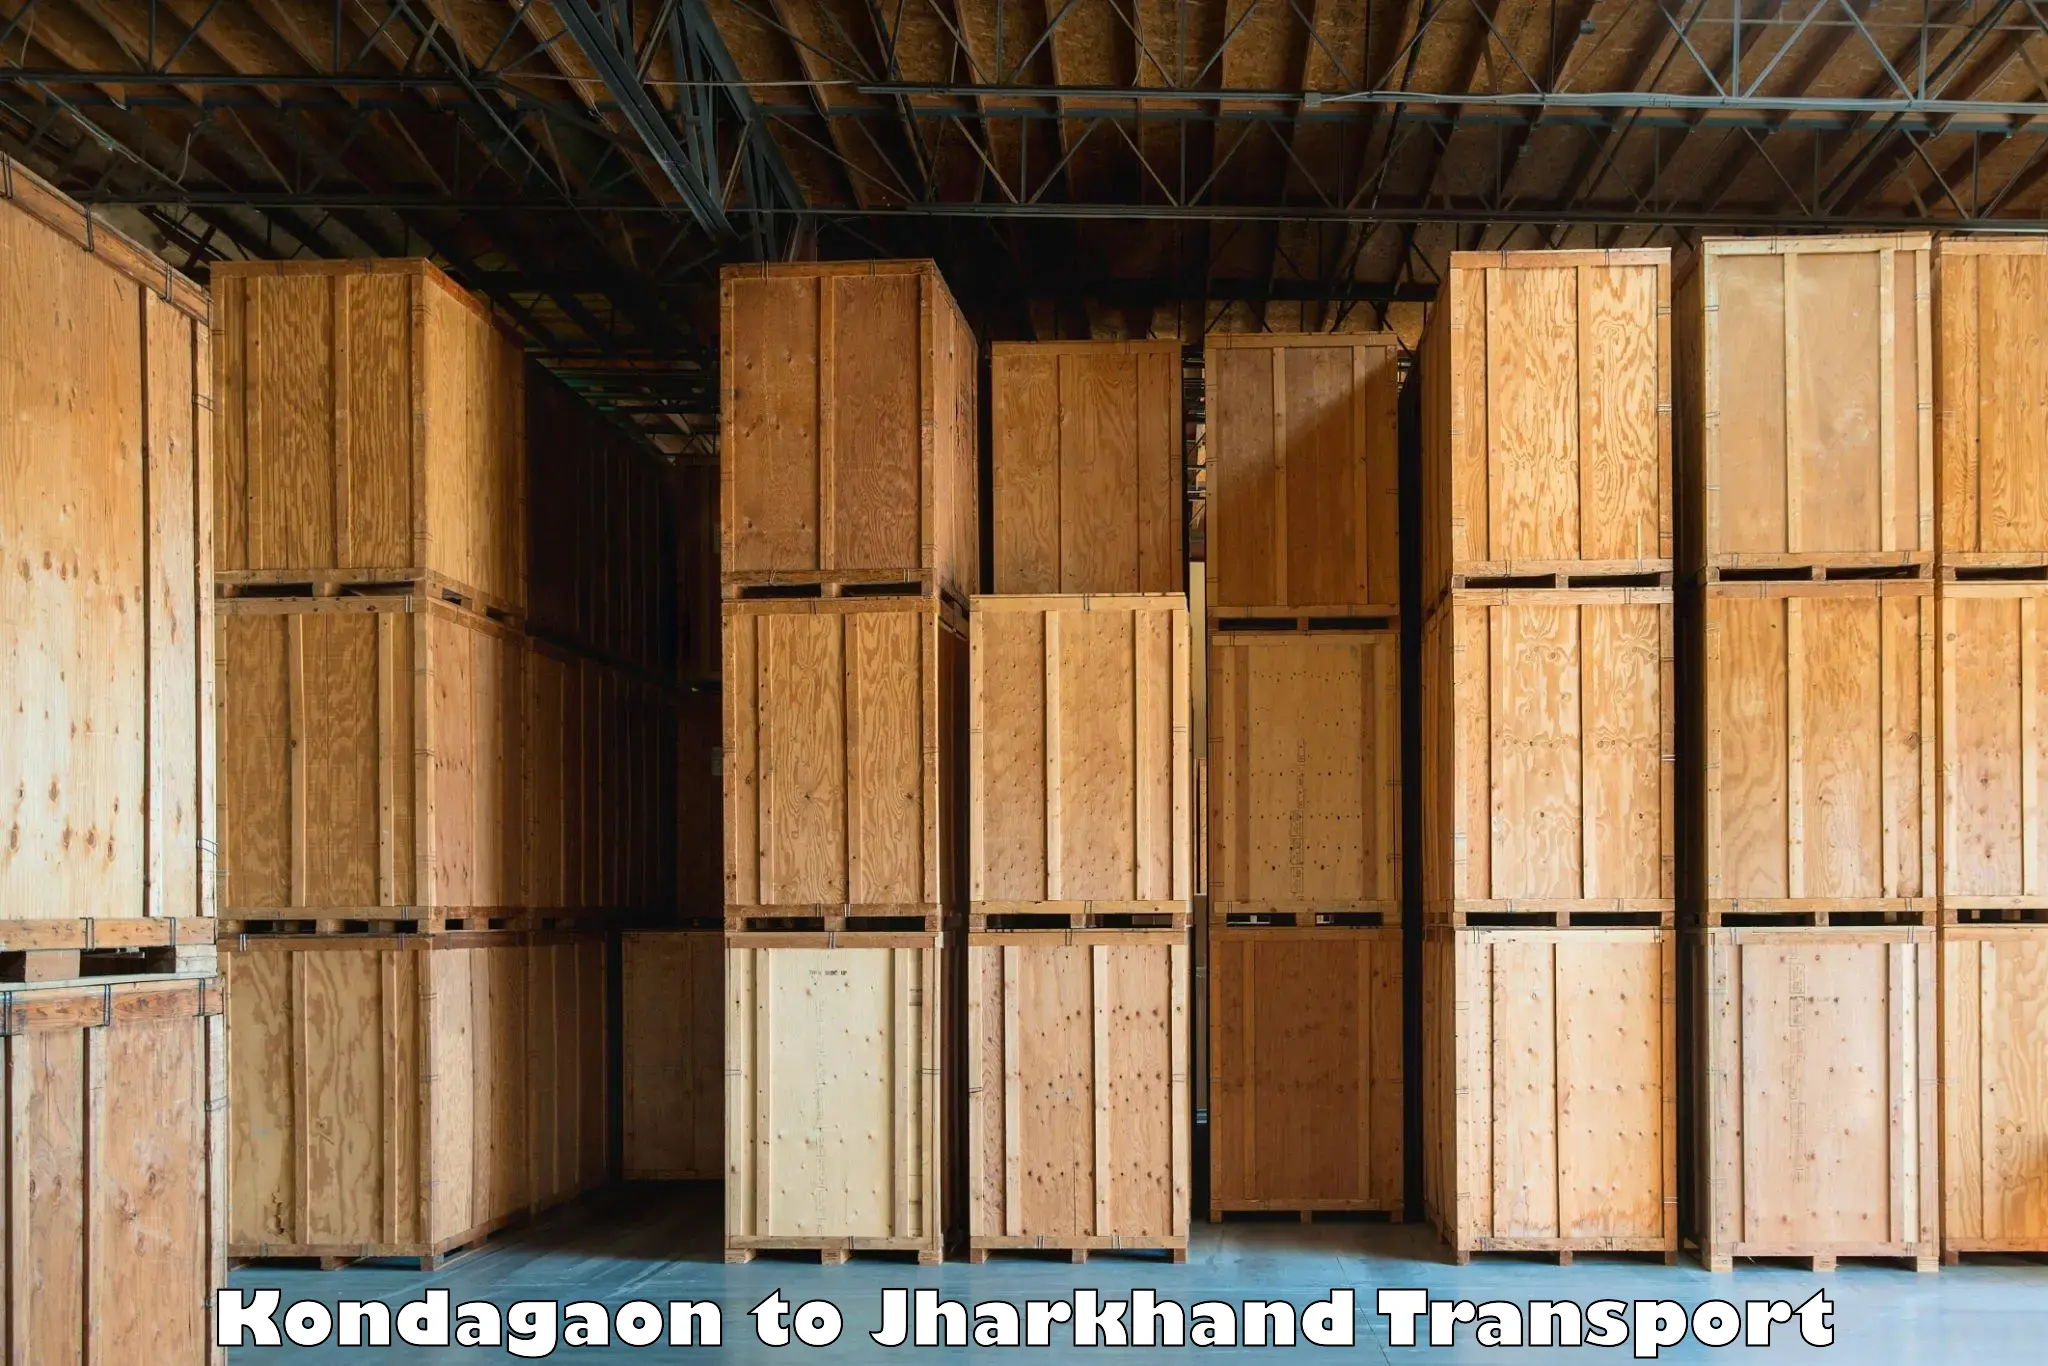 Truck transport companies in India Kondagaon to Dhanbad